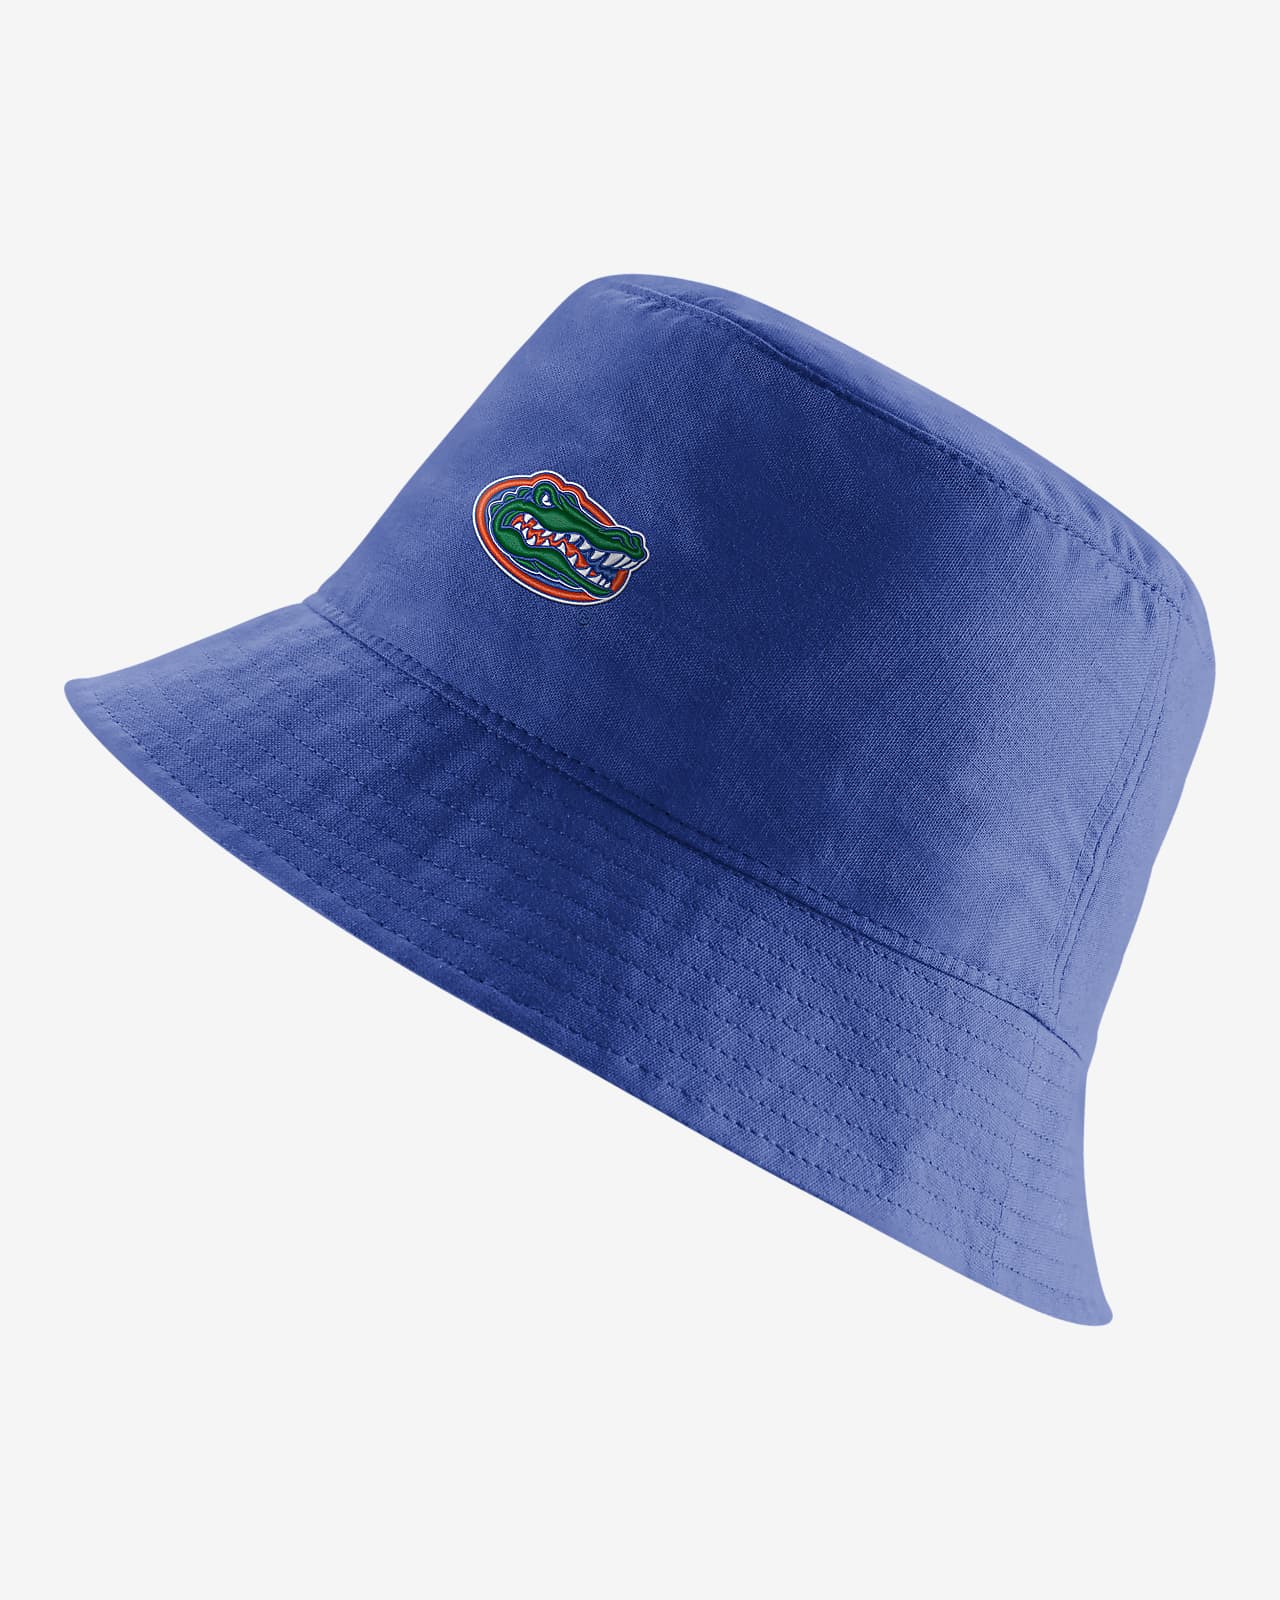 Florida Nike College Bucket Hat